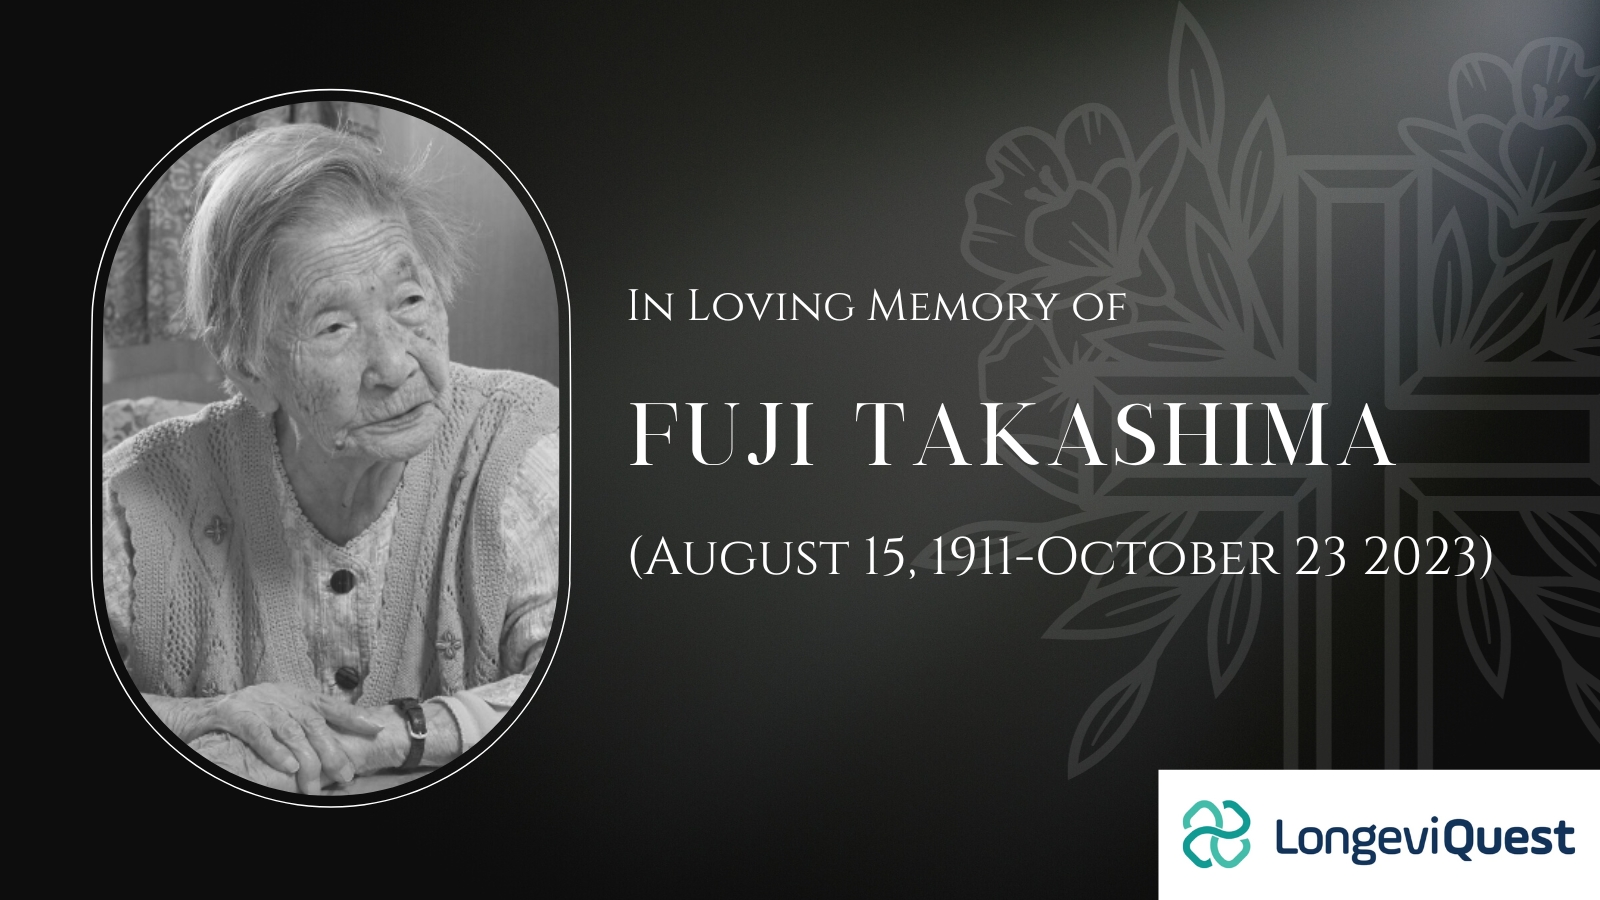 Fuji Takashima Dies at 112